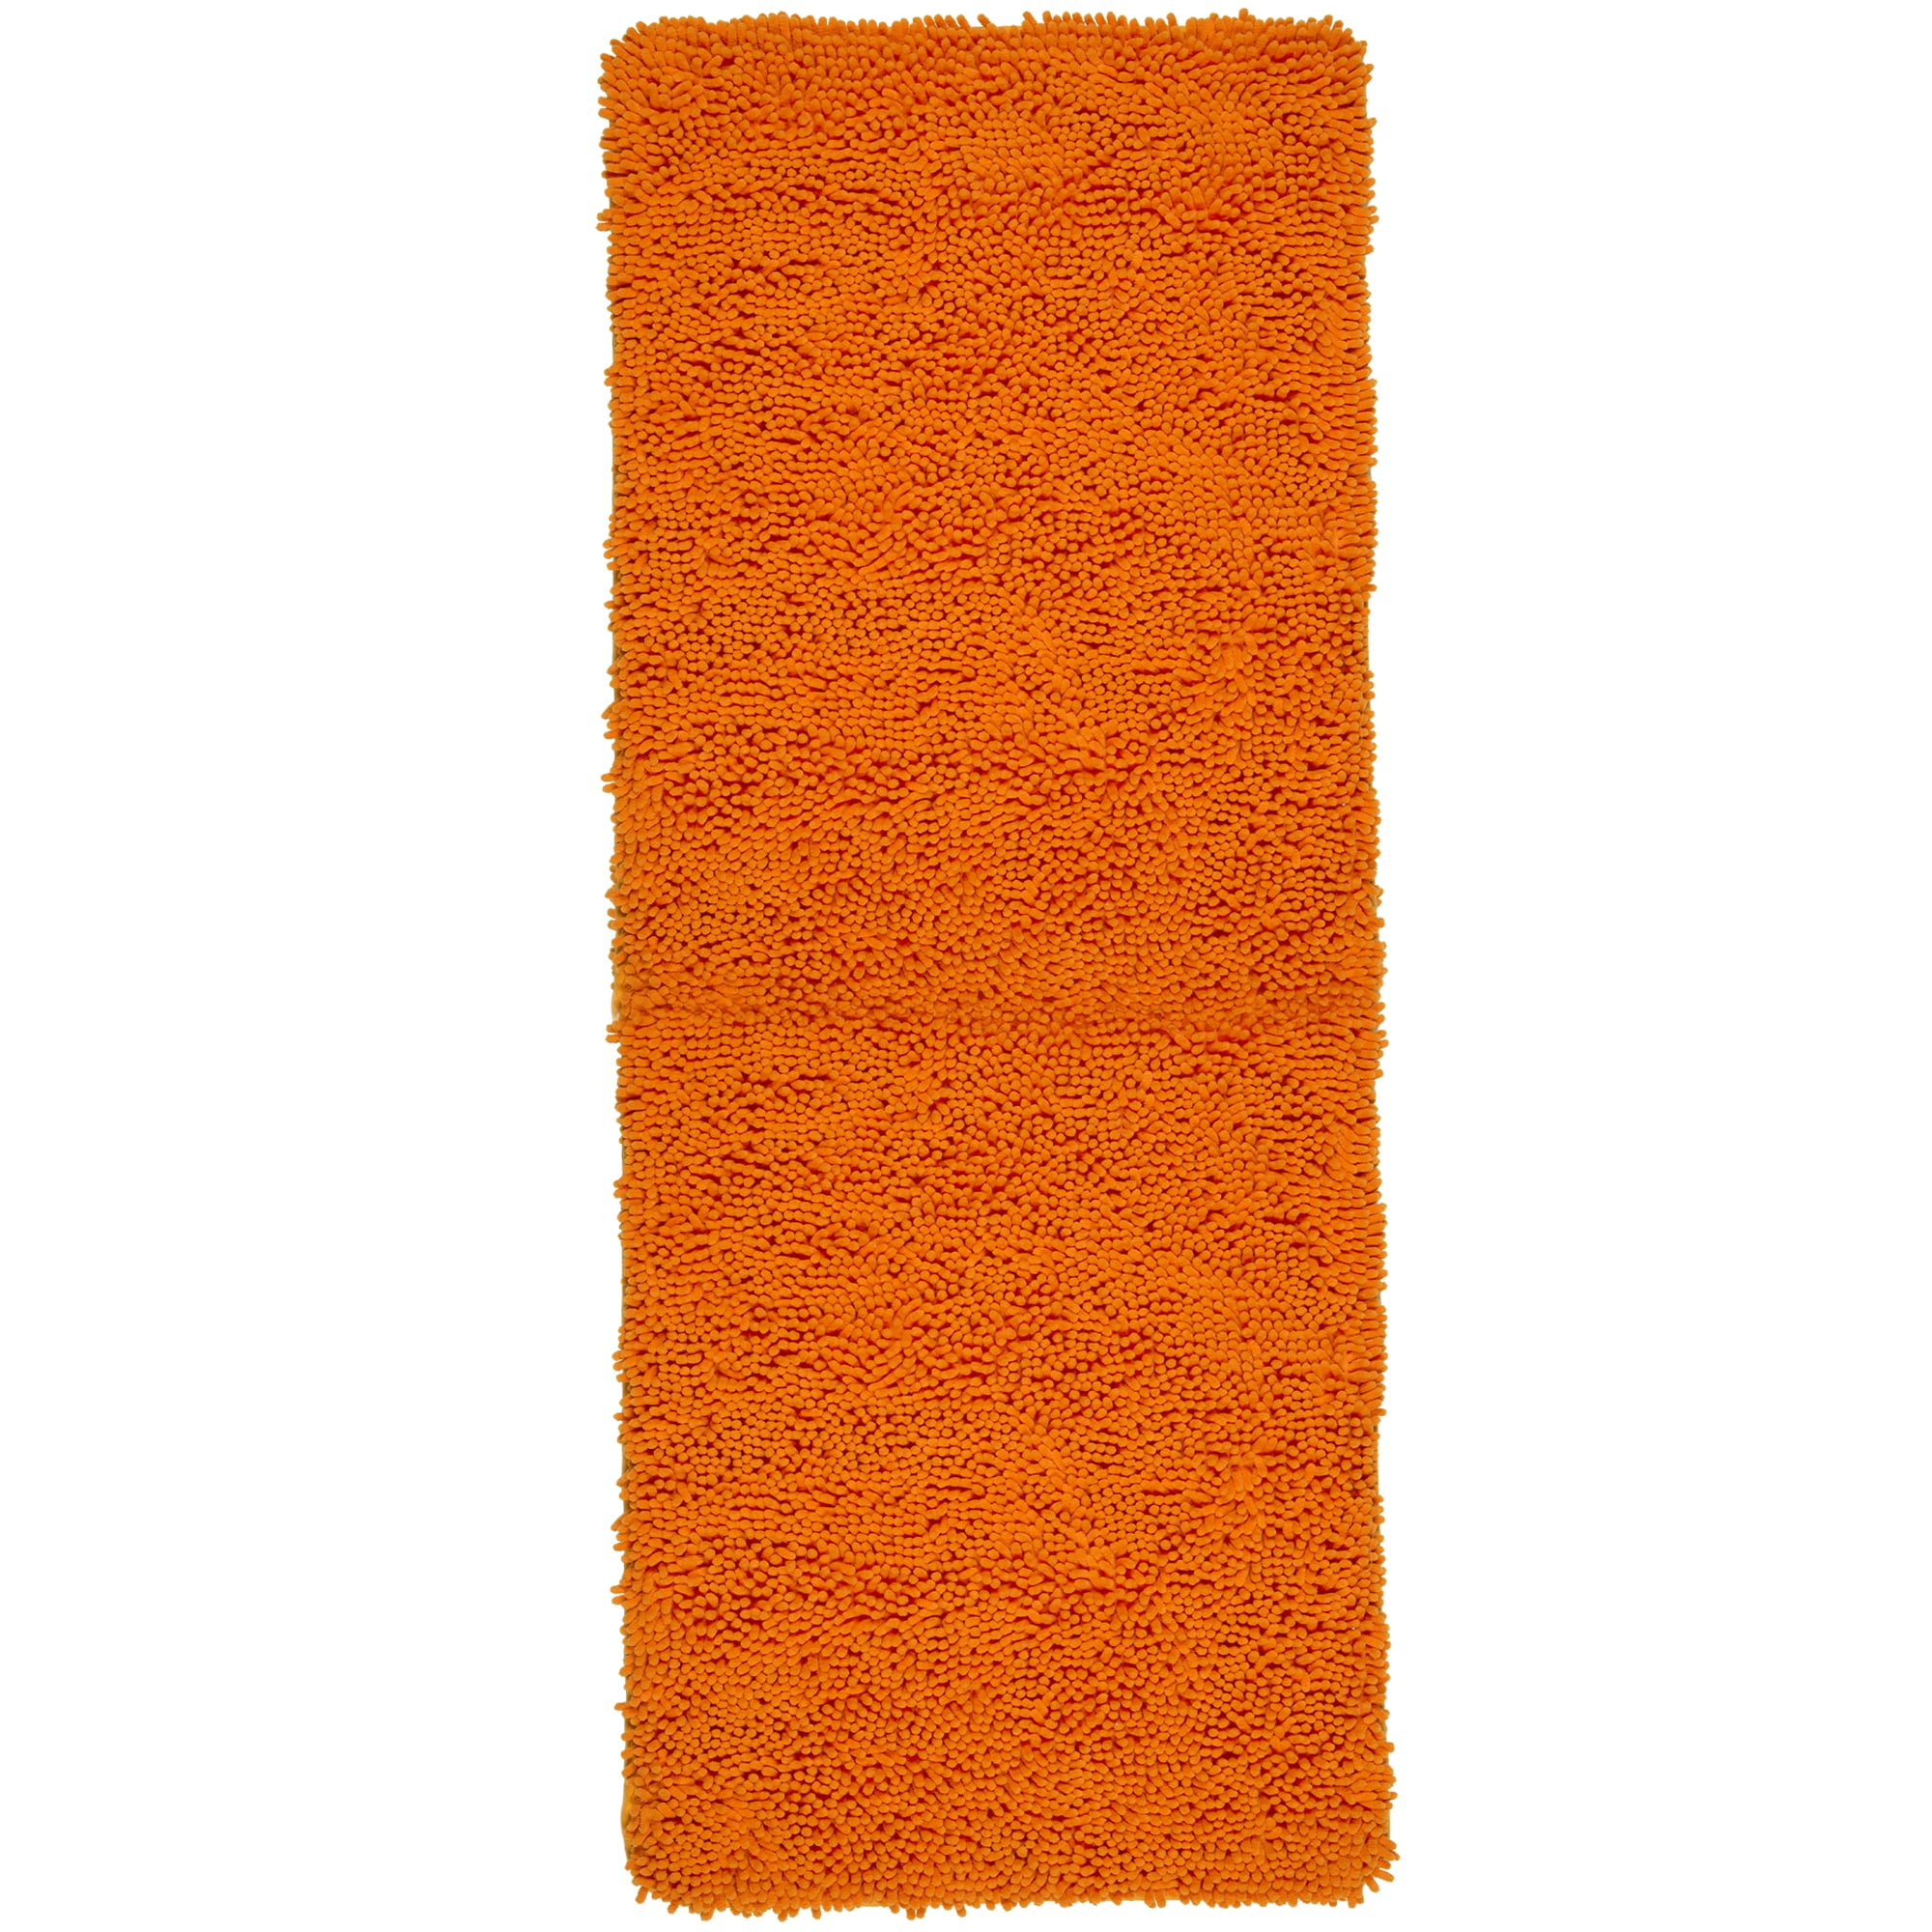 PLYH 2 Piece Memory Foam Shag Bath Rug Set - Color: Orange